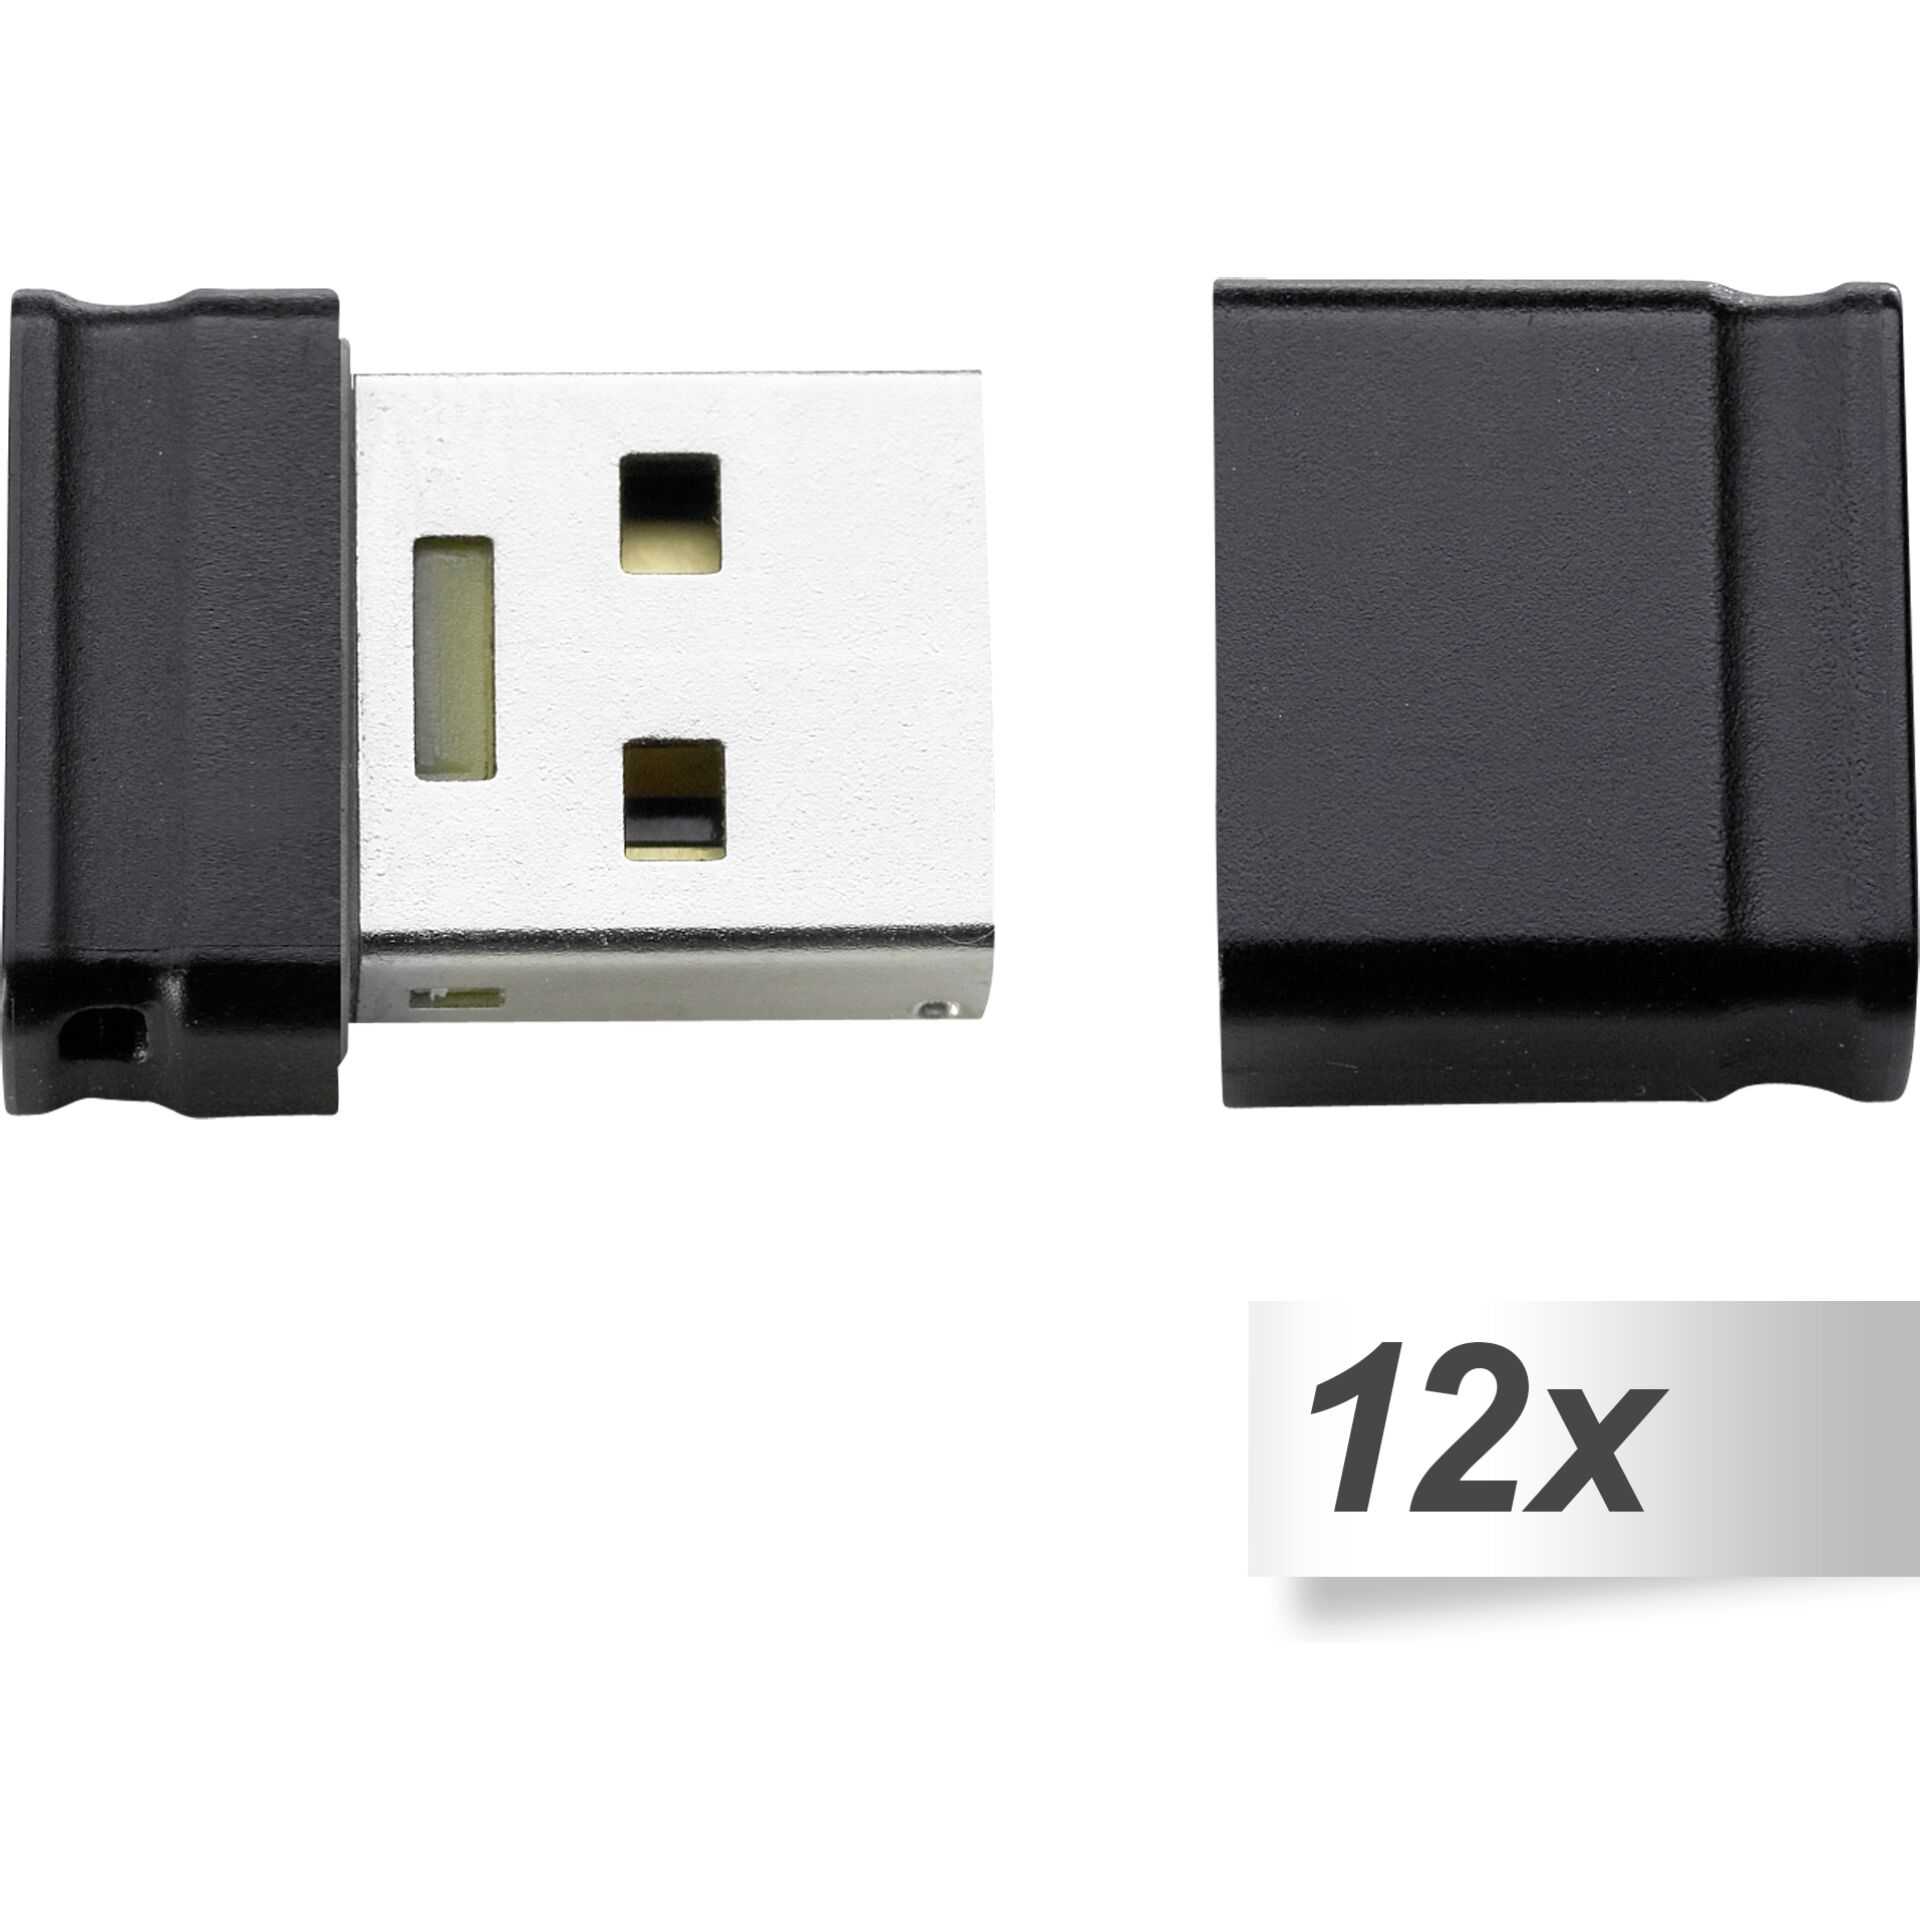 4 GB Intenso Micro Line USB 2.0 Stick lesen: 16.5MB/s, schreiben: 6.5MB/s